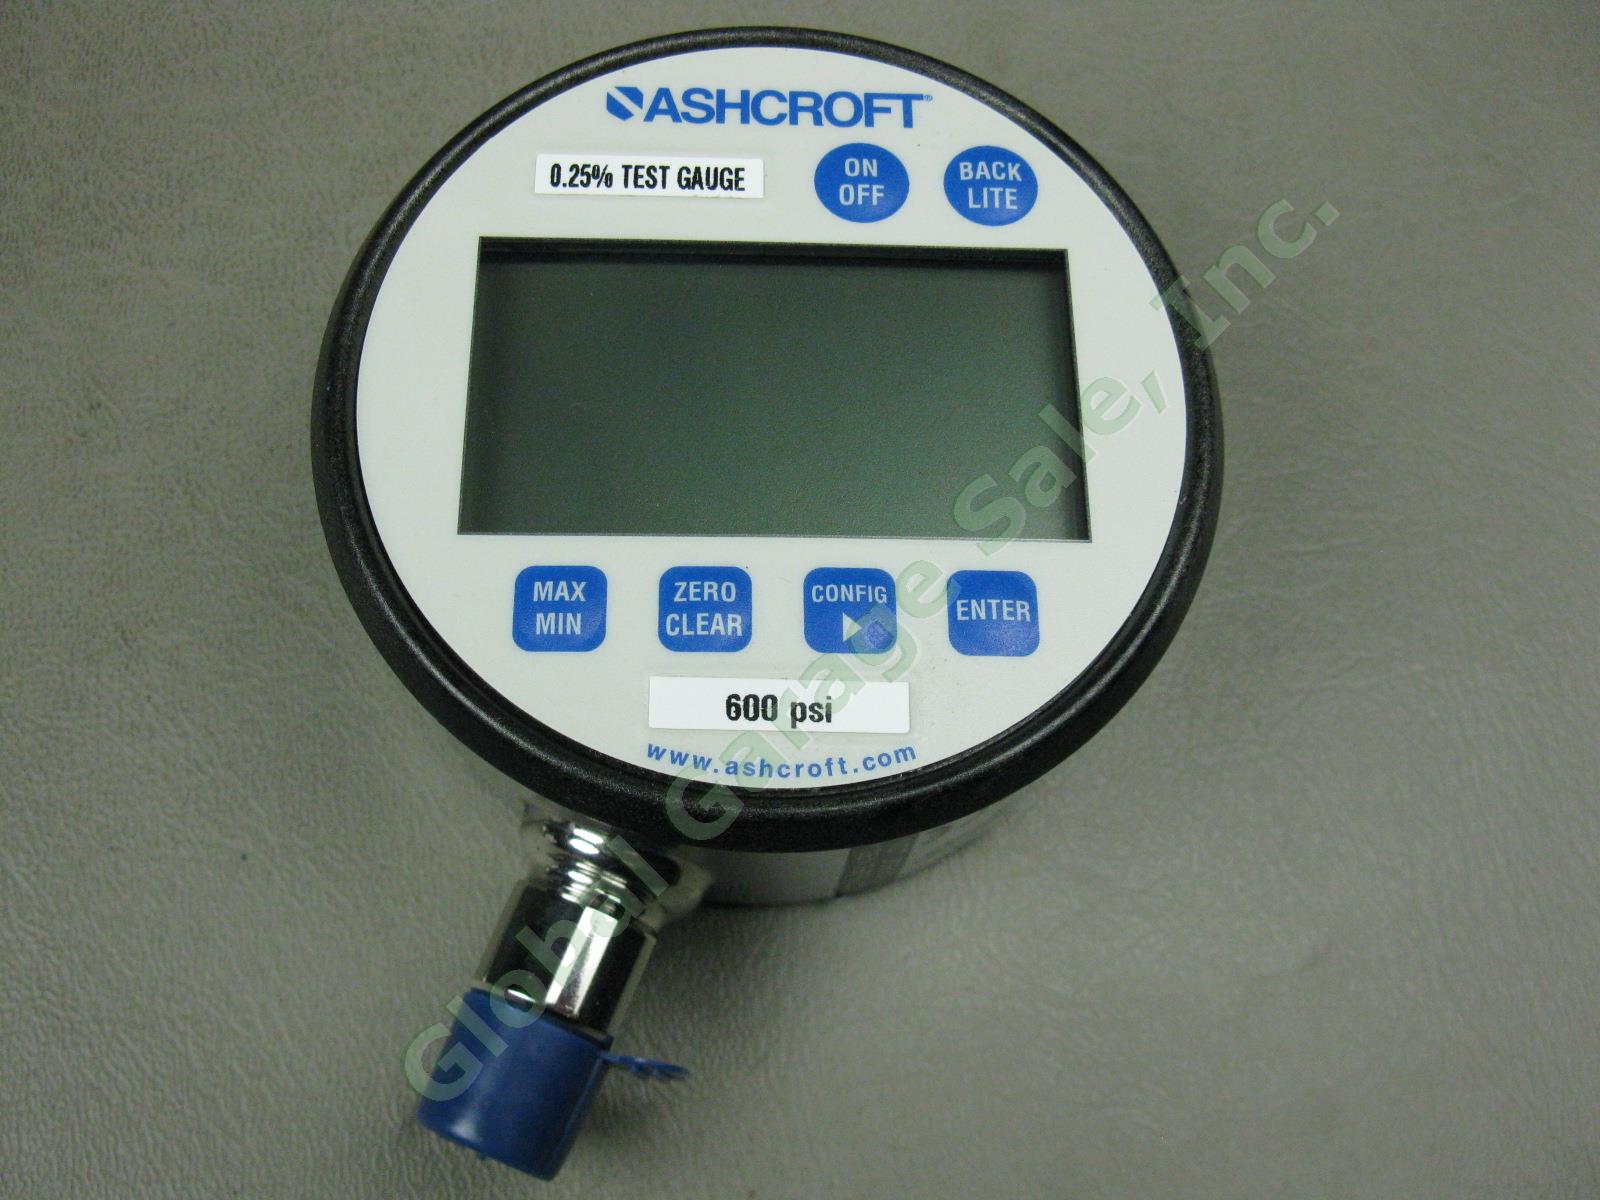 NOS Ashcroft 0.25% Digital Pressure Test Gauge 302084SD02L 600psi + Cover Pouch+ 2